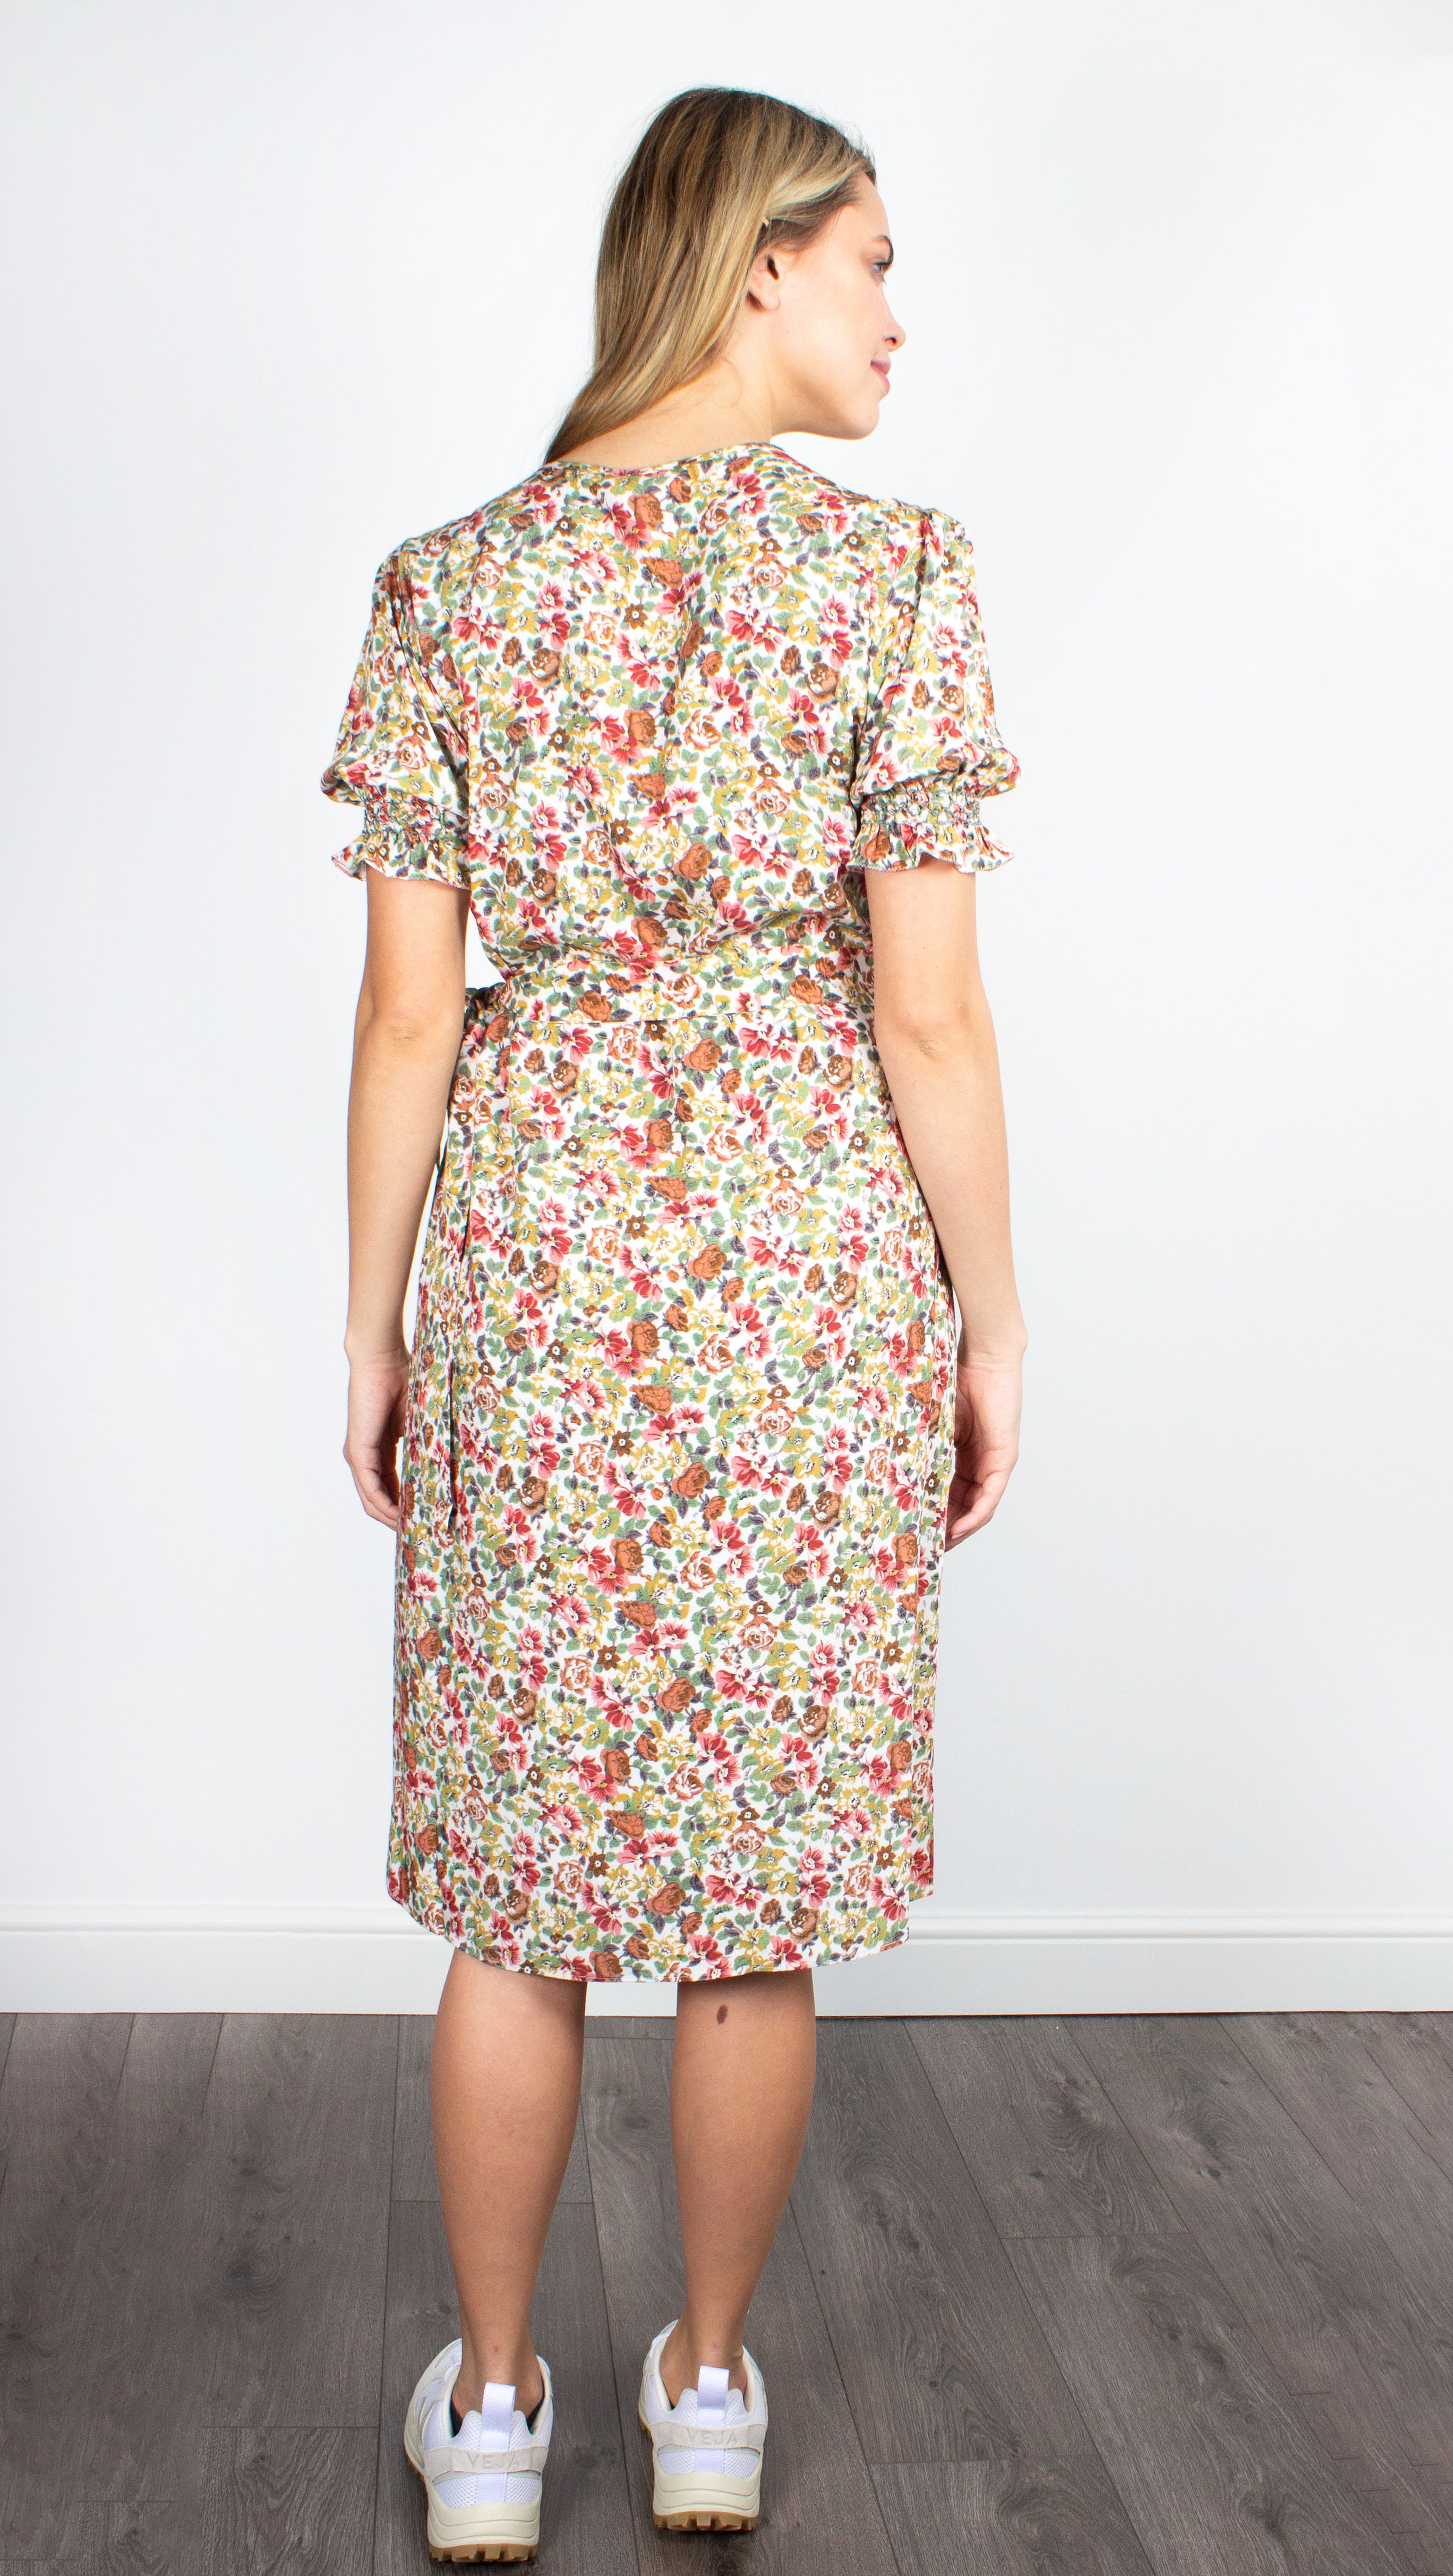 Loretta Caponi Afrodite floral-print dress